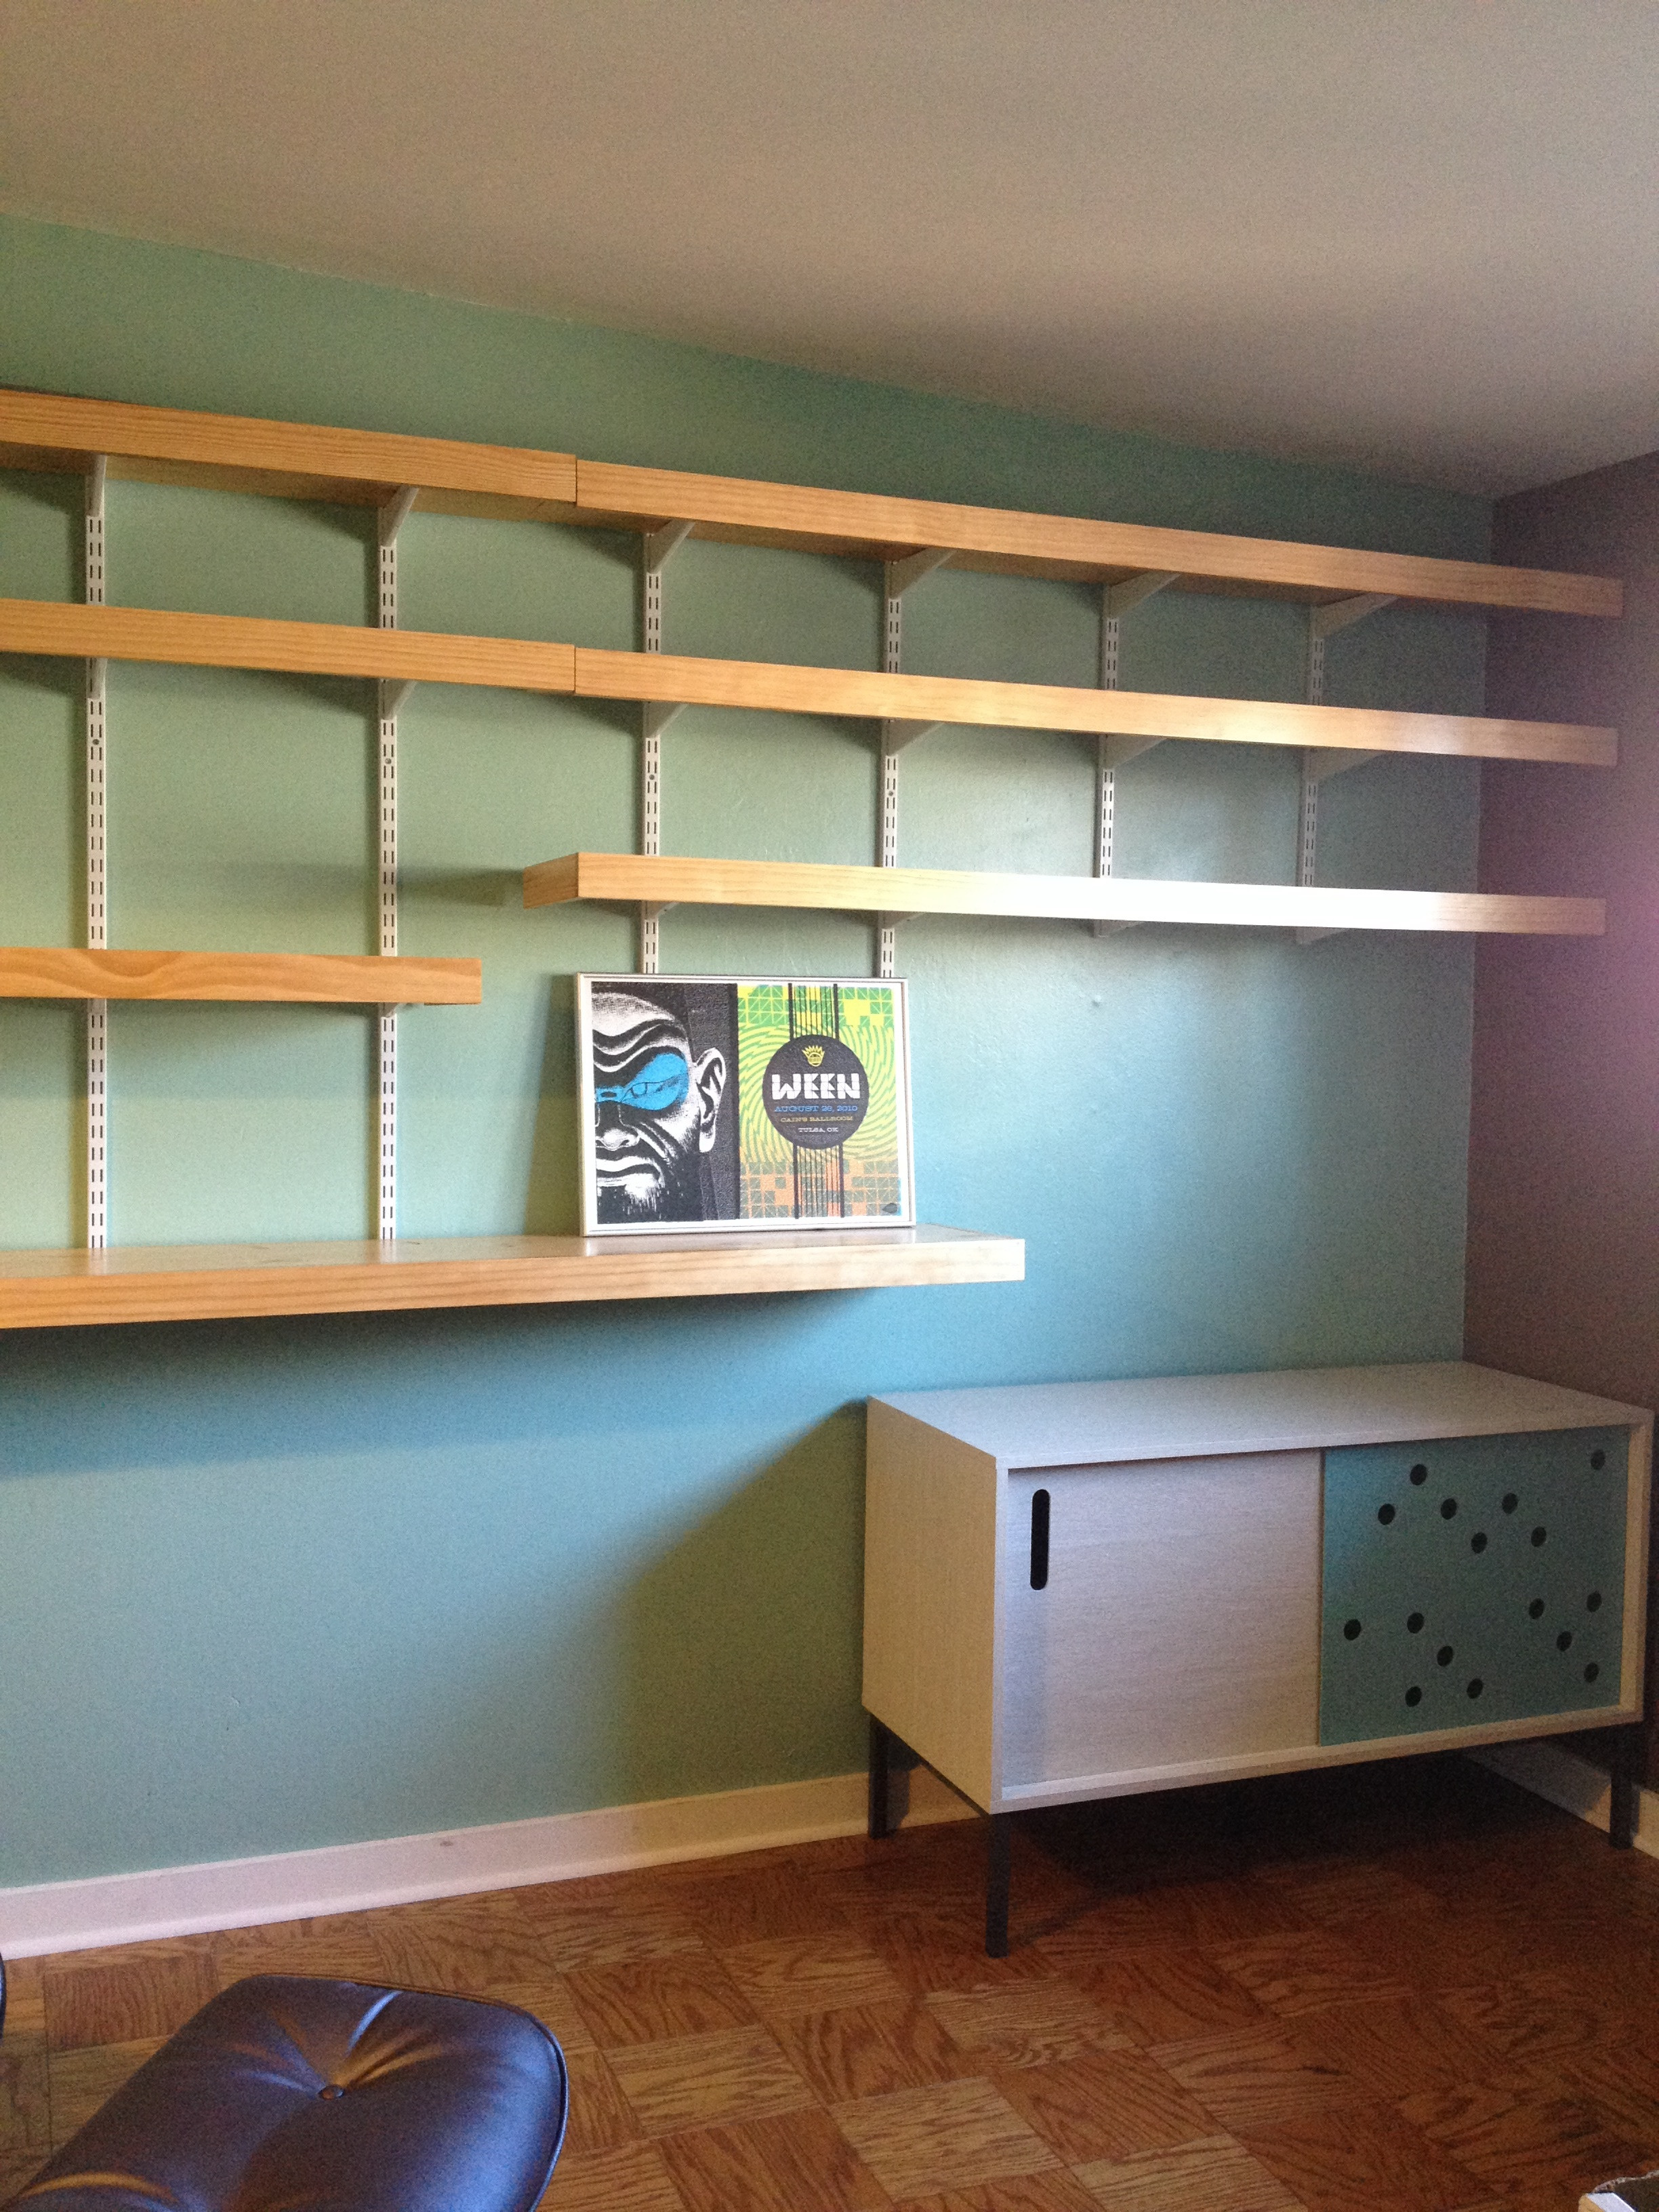 Best ideas about DIY Wall Shelf
. Save or Pin DIY Modern Wall Shelves Now.